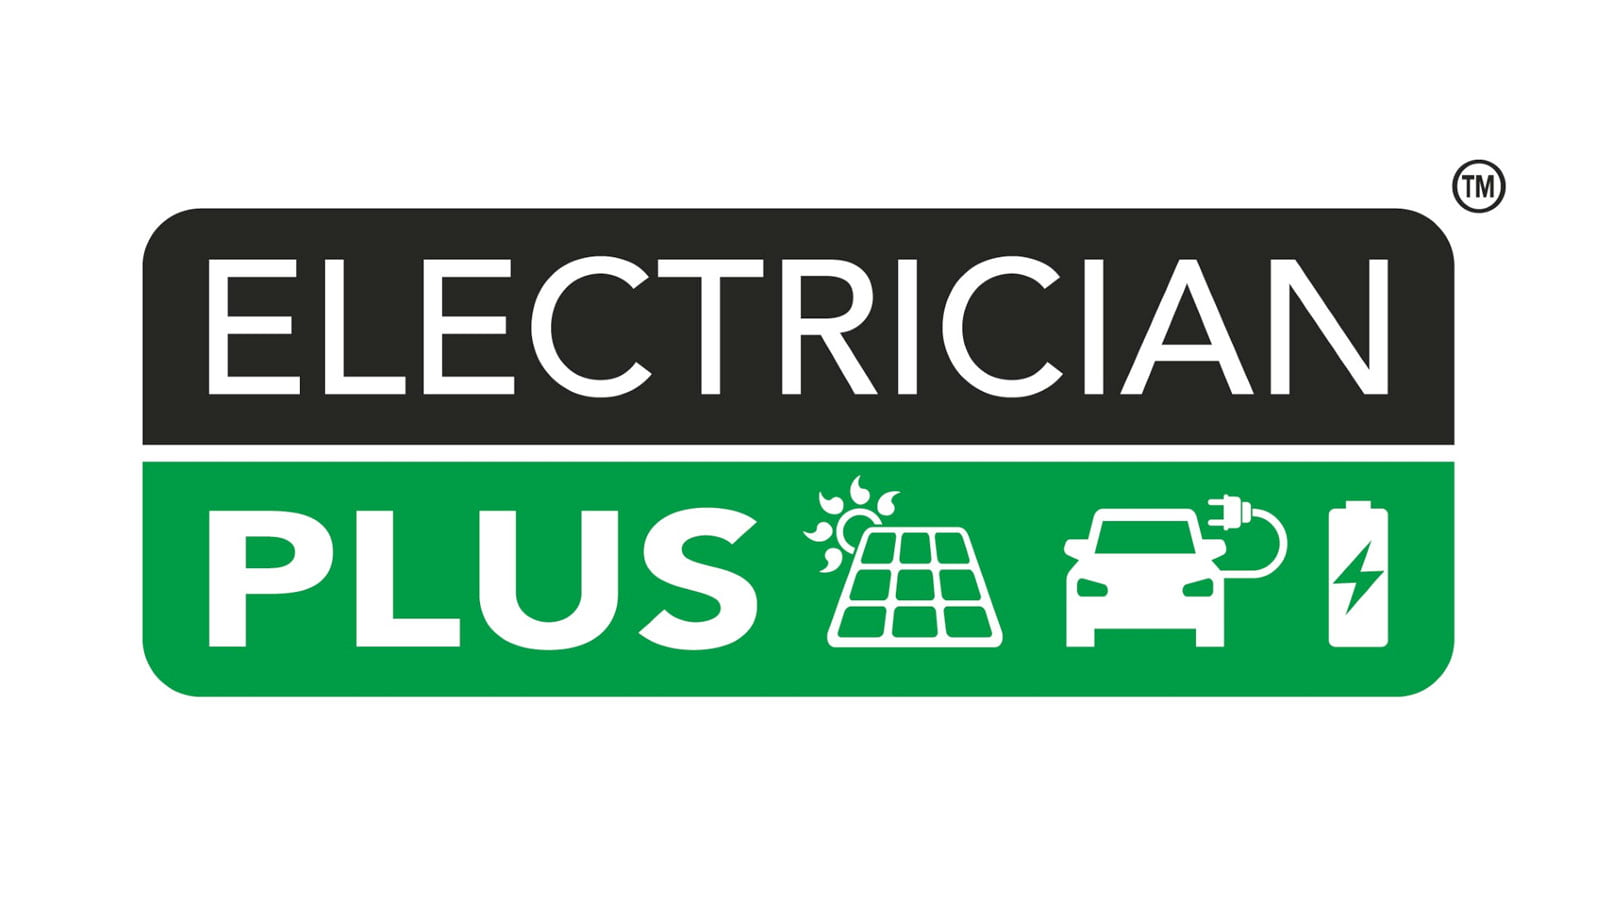 Electrician Plus - TESP Logo